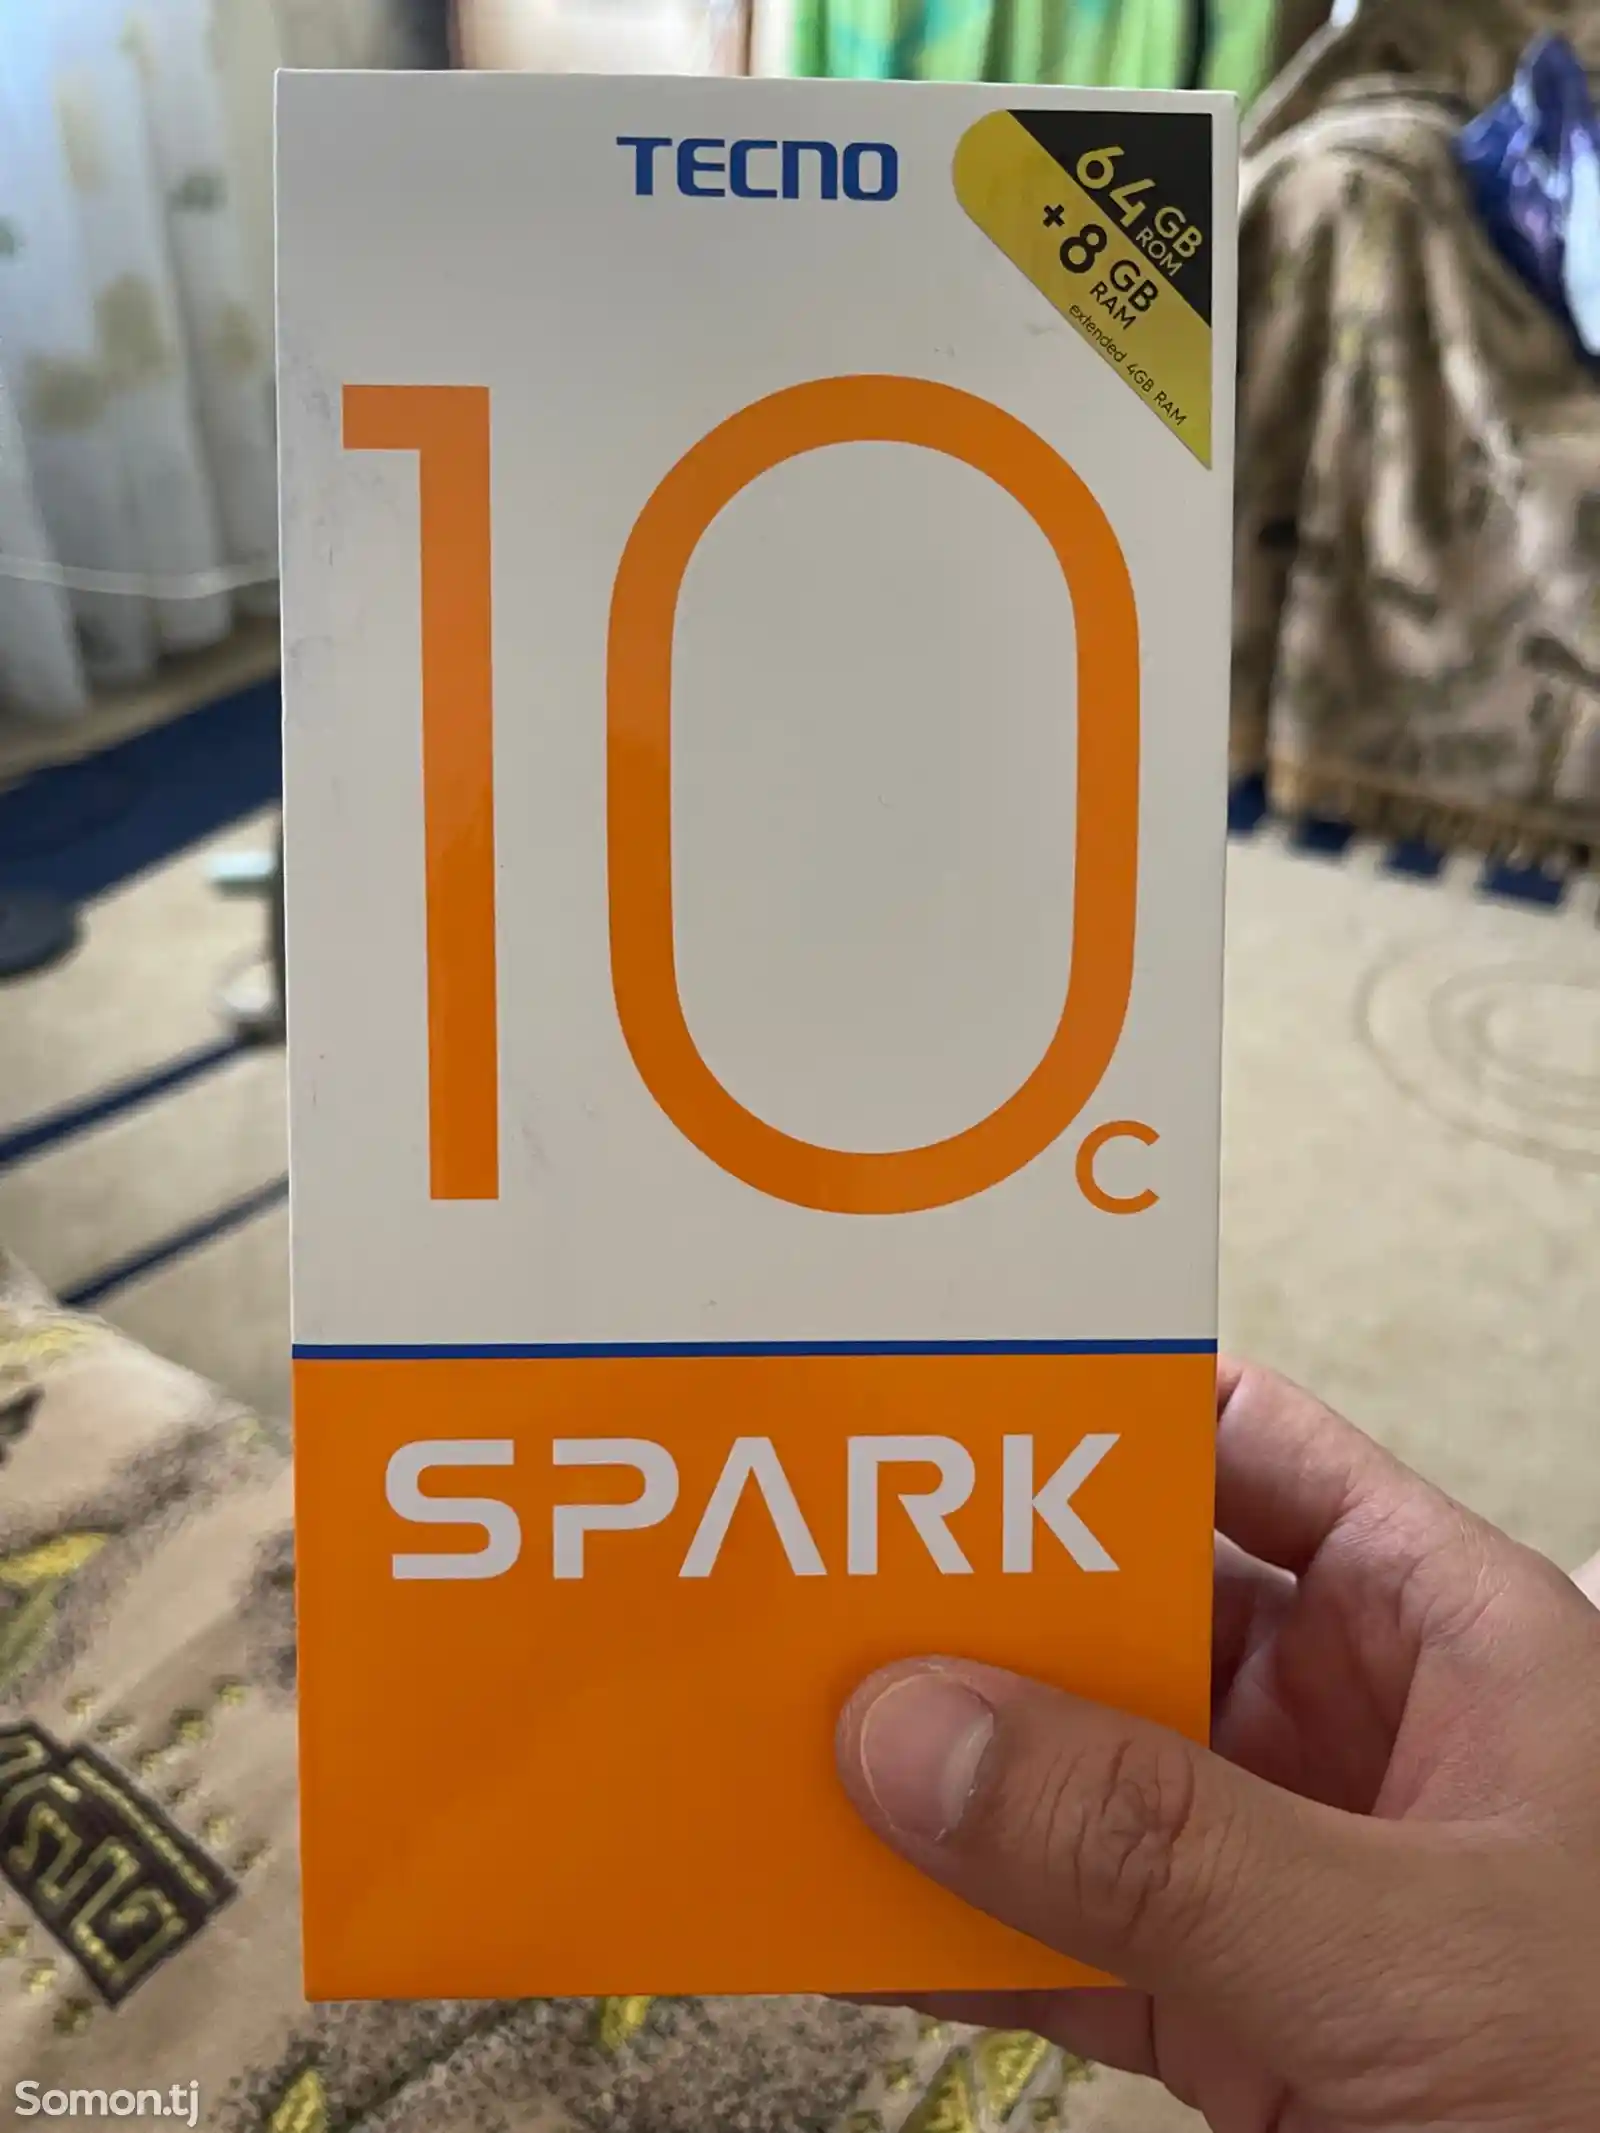 Tecno Spark 10C